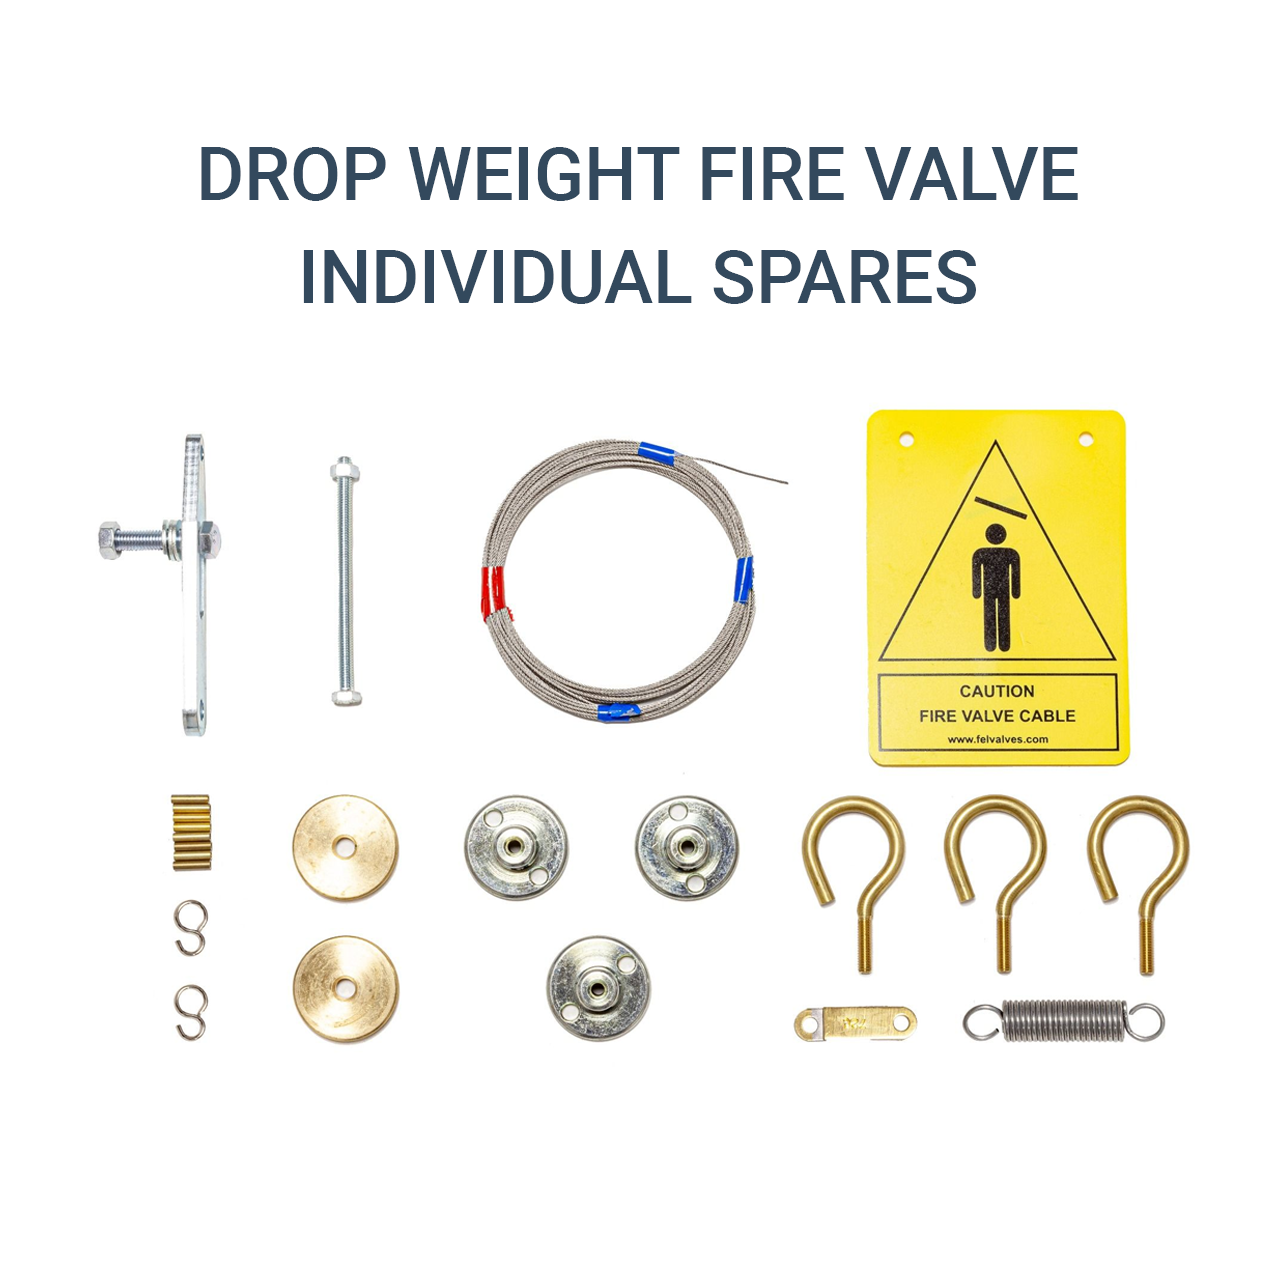 Drop weight fire valve spares